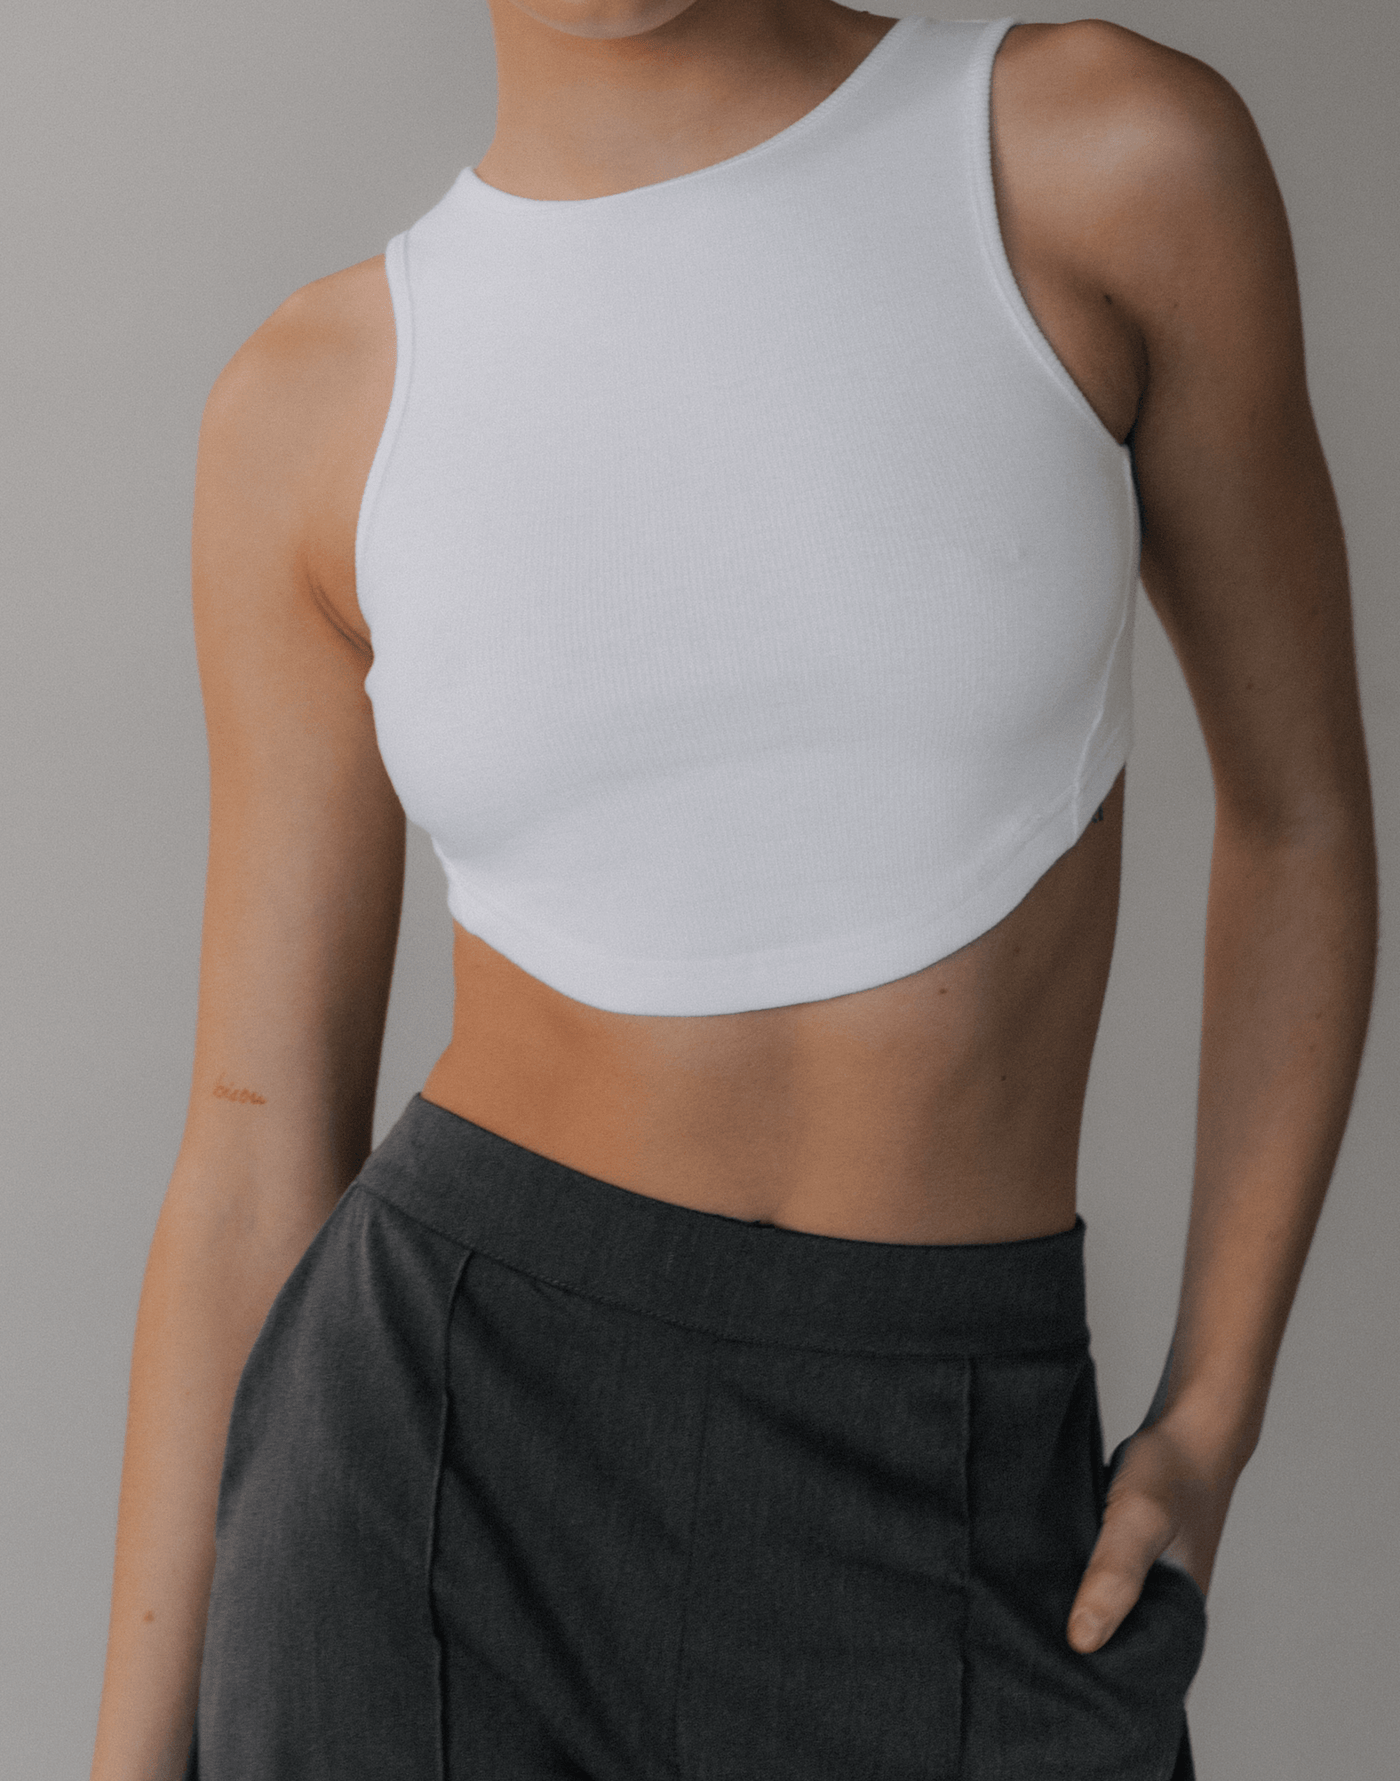 Gigi Rib Tank (White) - Ribbed Tank Top - Women's Top - Charcoal Clothing